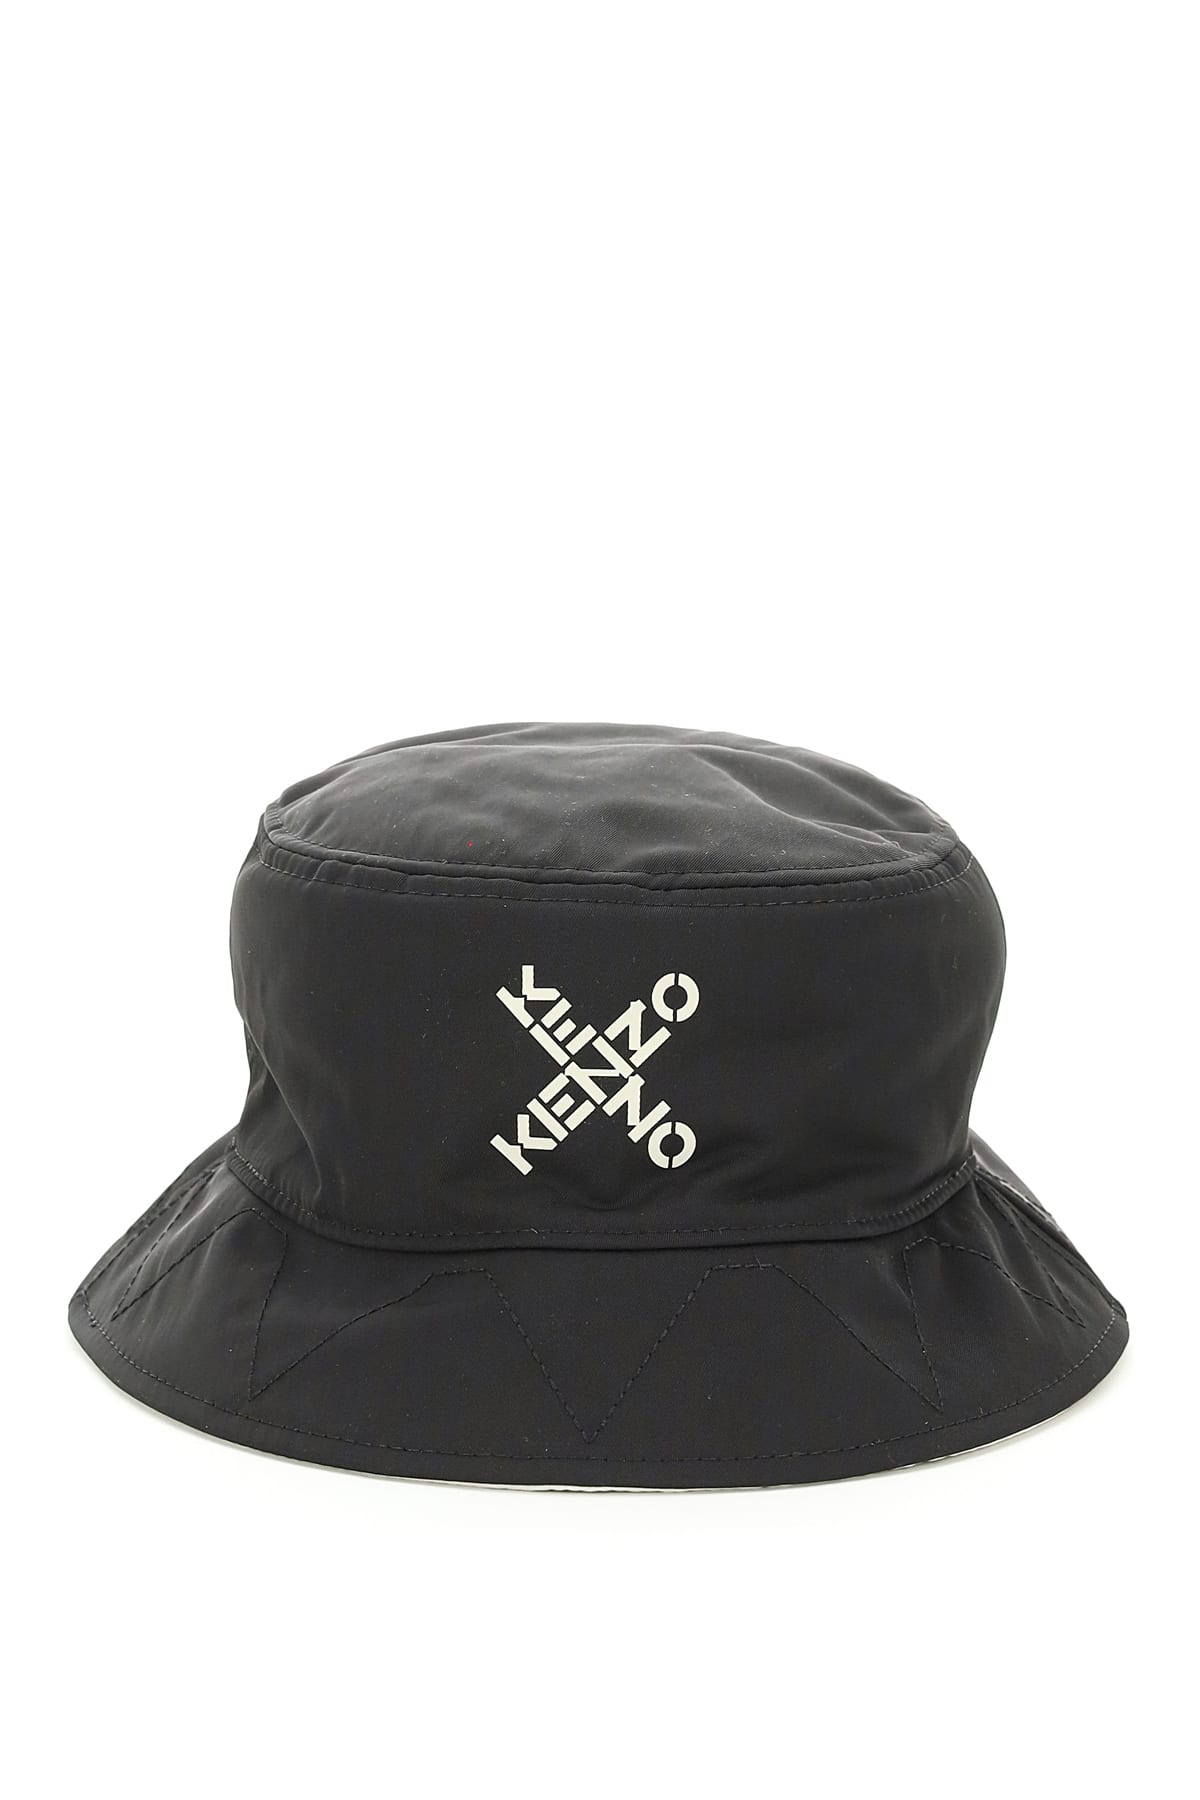 Kenzo Kenzo Sport Little X Reversible Bucket Hat